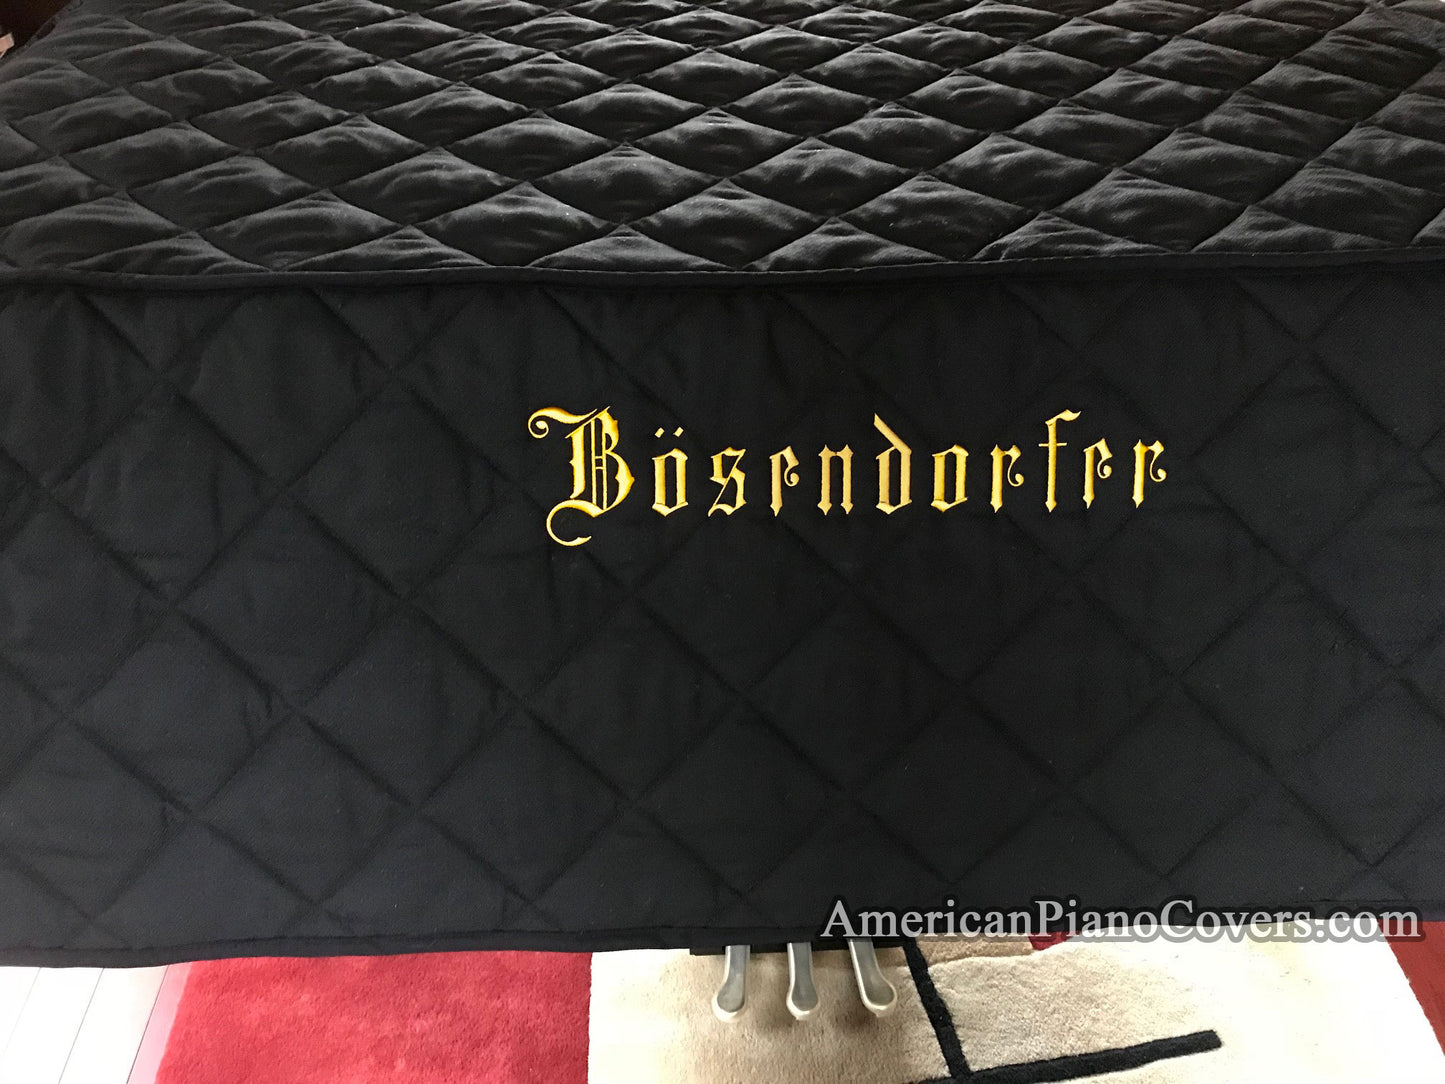 bosendorfer piano cover black quilt with logo